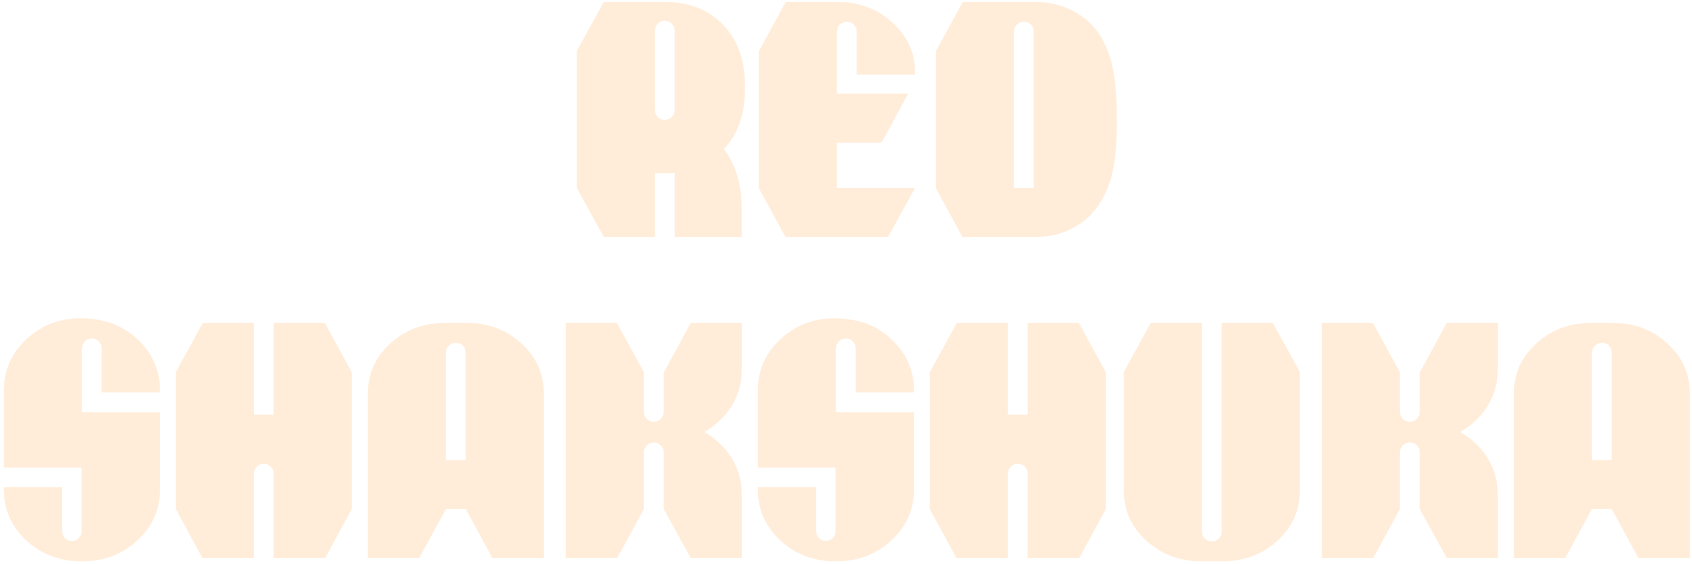 Red Shakshuka logo